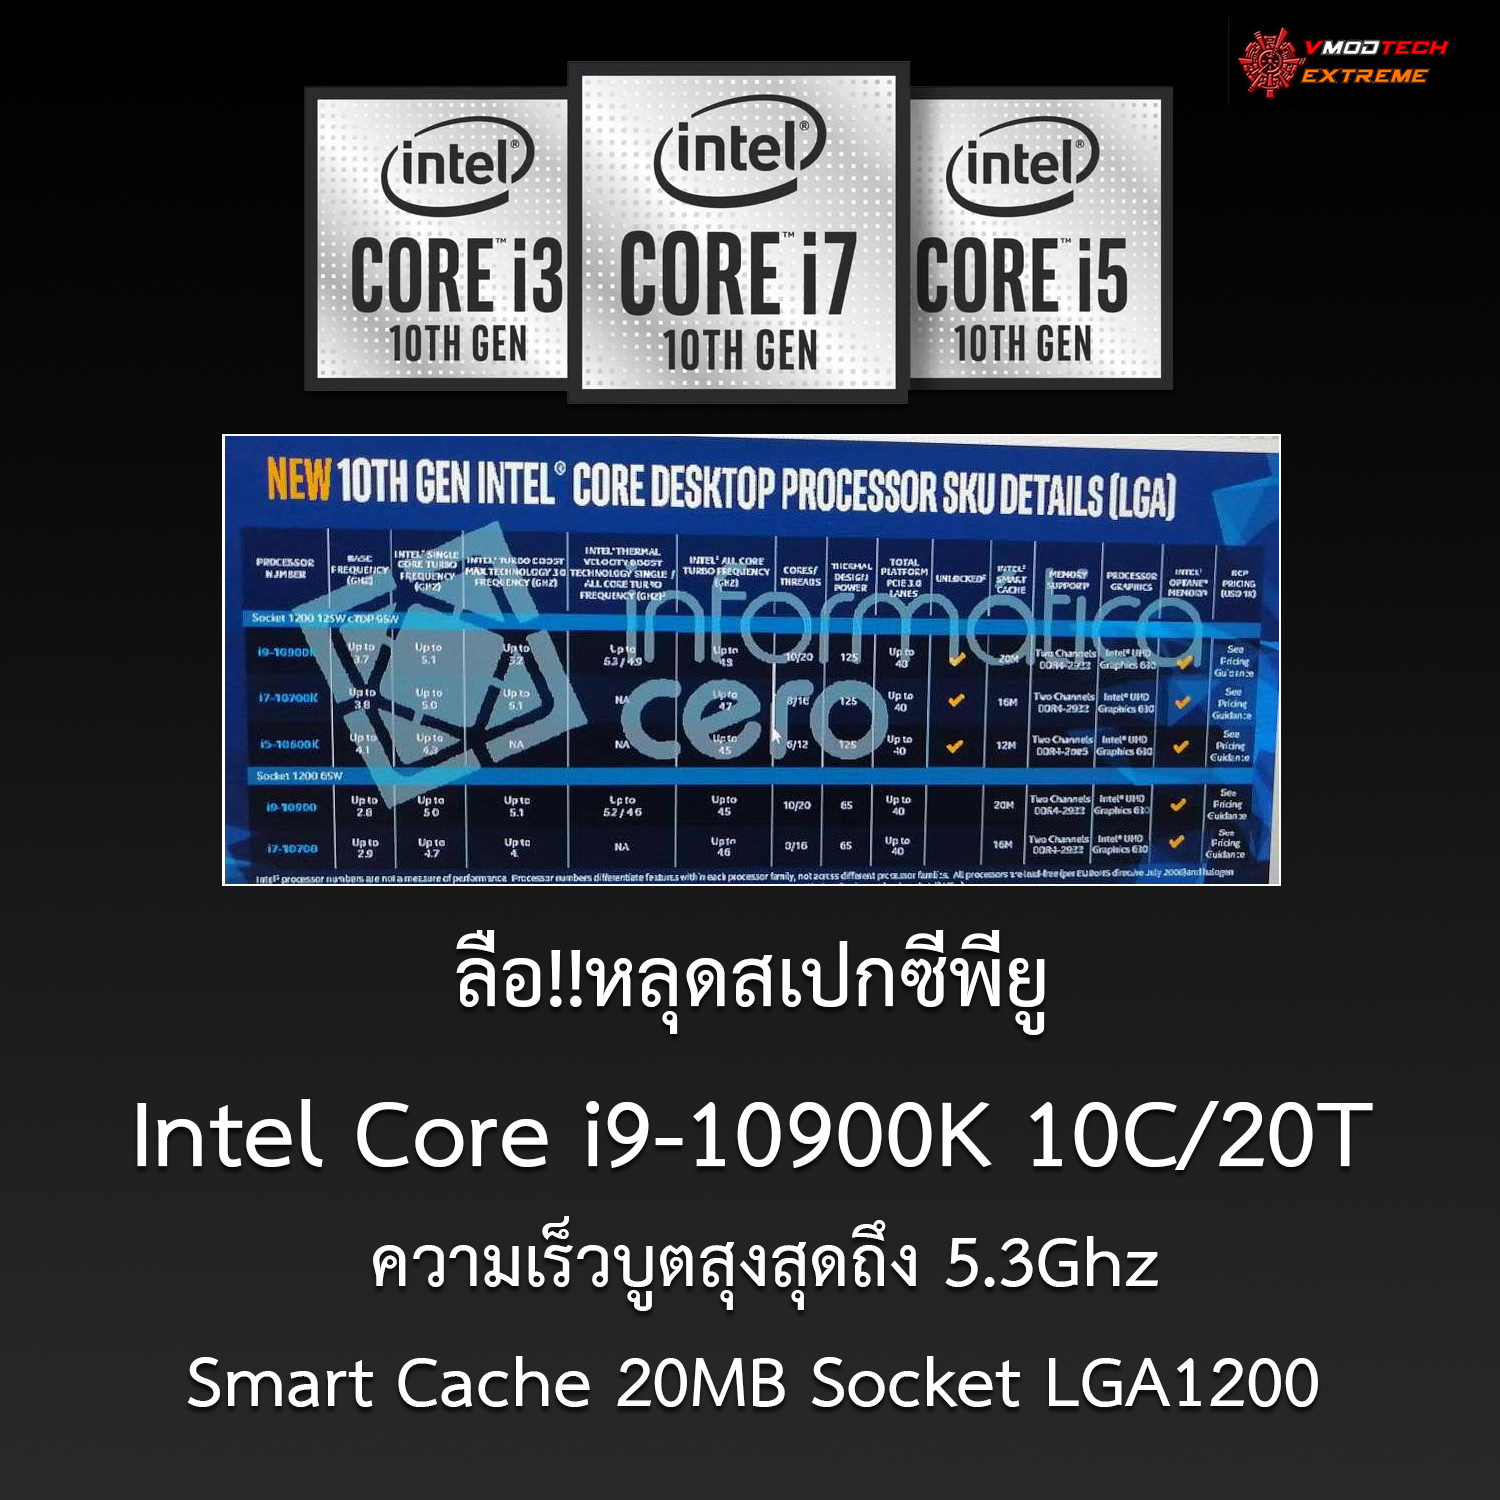 intel 10th gen comet lake s core i9 10900 ลือ!!หลุดสเปกซีพียู Intel Core i9 10900K 10C/20T ความเร็วบูตสุงสุดถึง 5.3Ghz กันเลยทีเดียวและข้อมูลสเปก Intel 10th Gen Comet Lake S ร่นใหม่ล่าสุดในรุ่นอื่นๆอีก 10รุ่นด้วยกัน